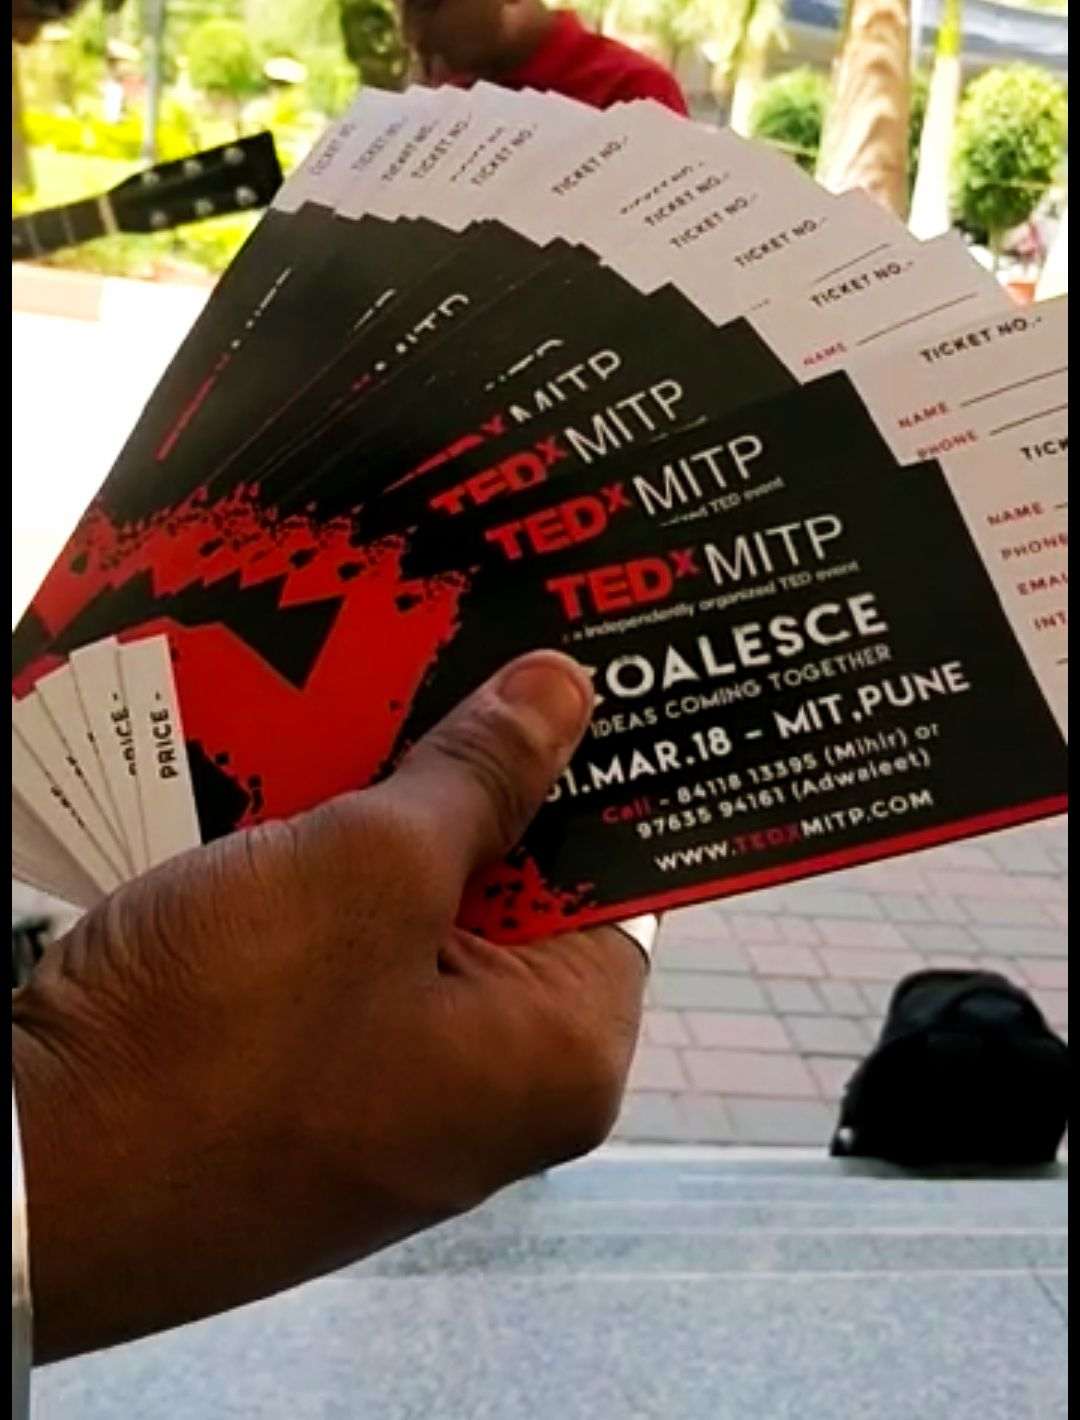 Tickets_of_TEDxMITP